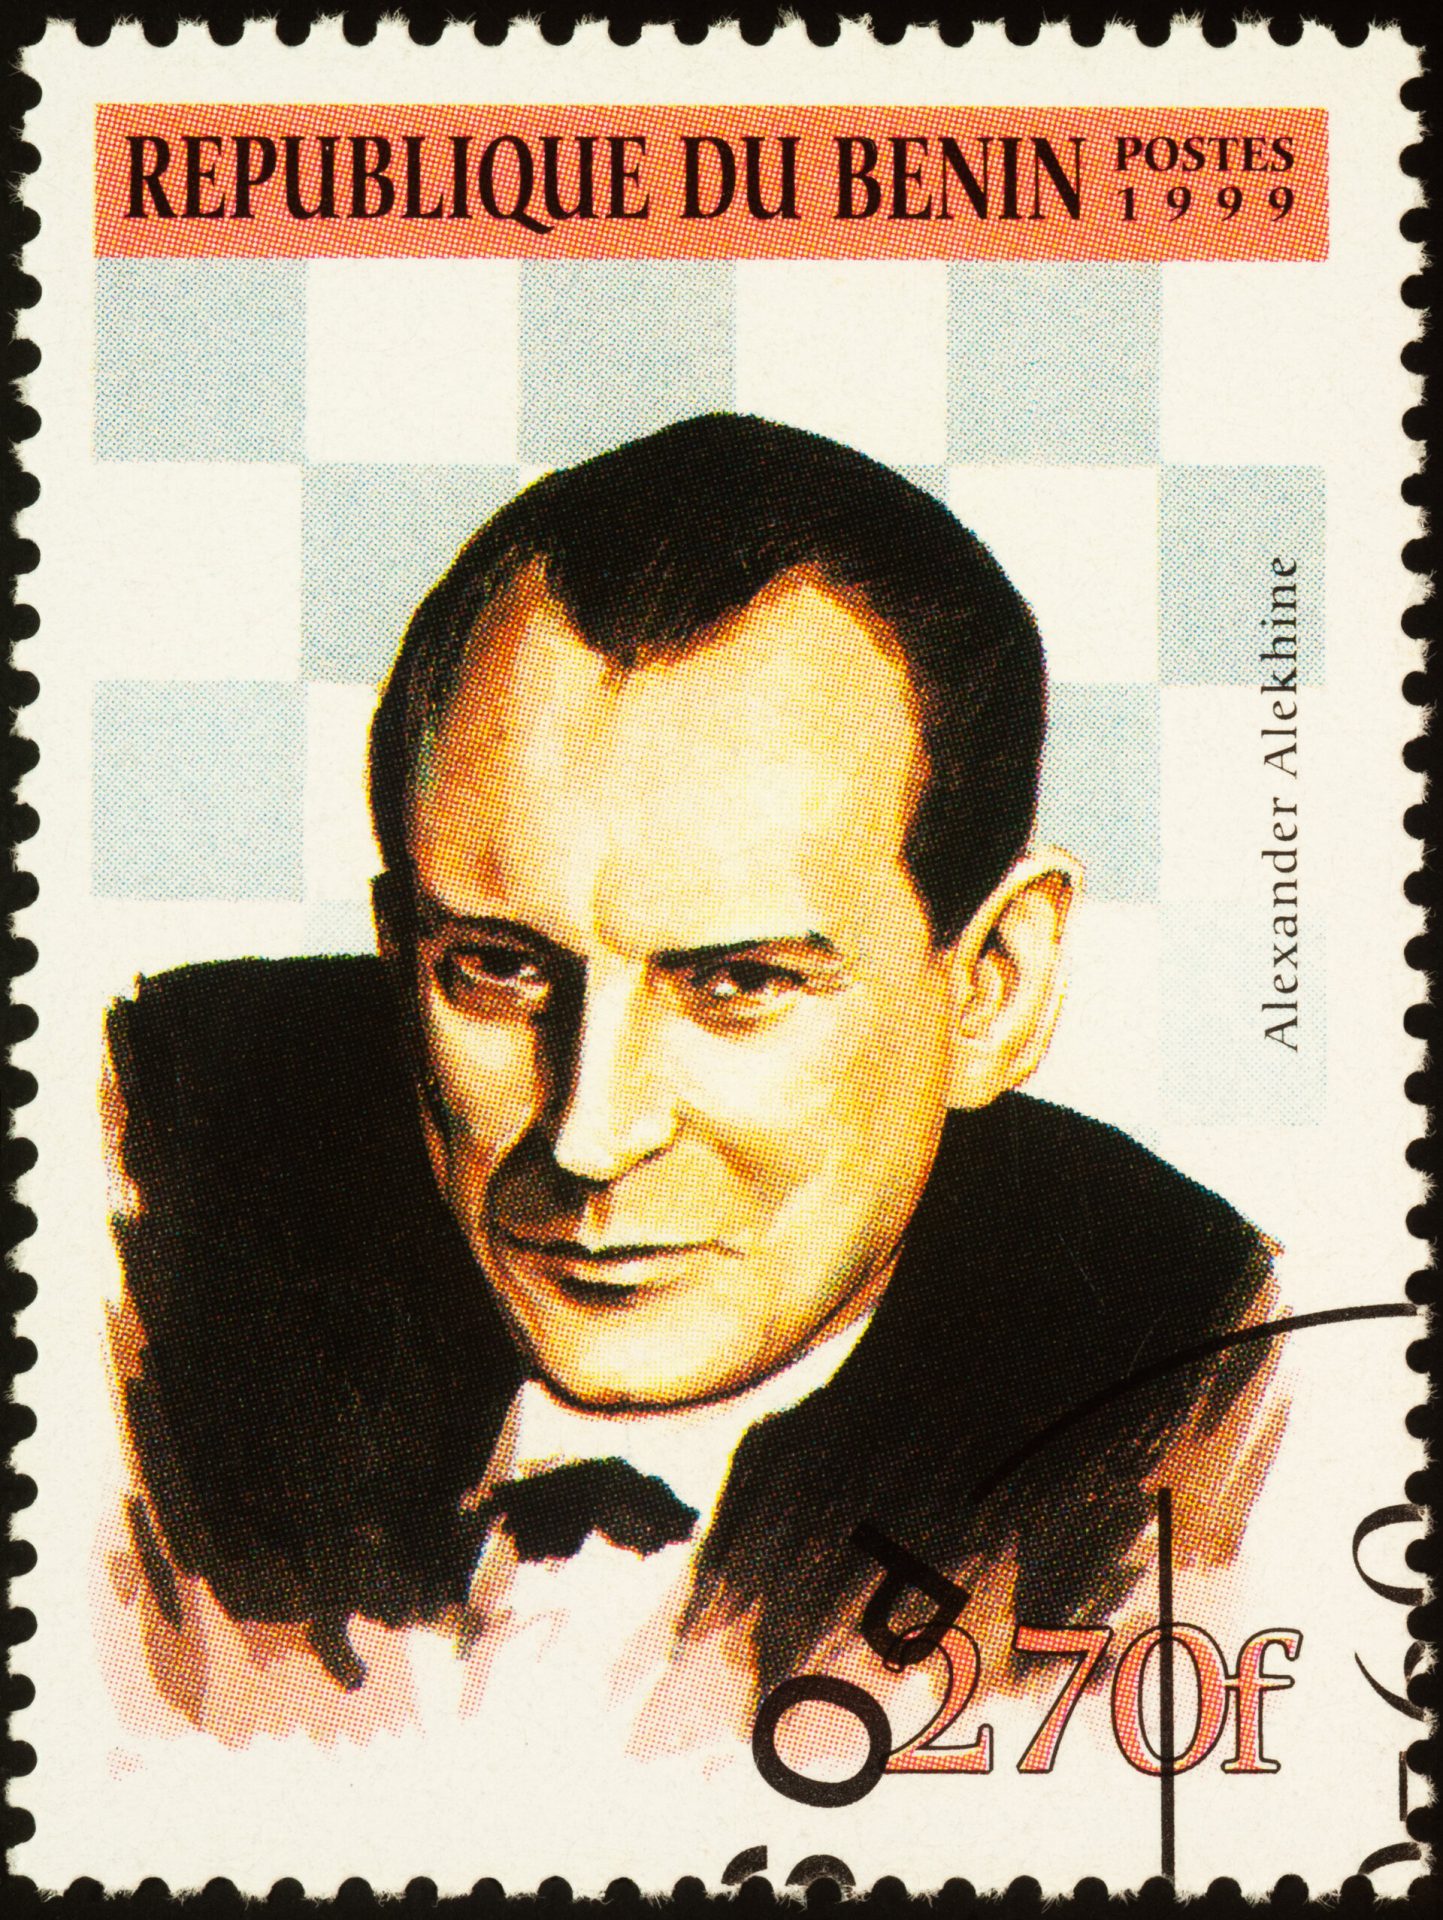 Stamp printed in Benin showing portrait of Alexander Alekhine